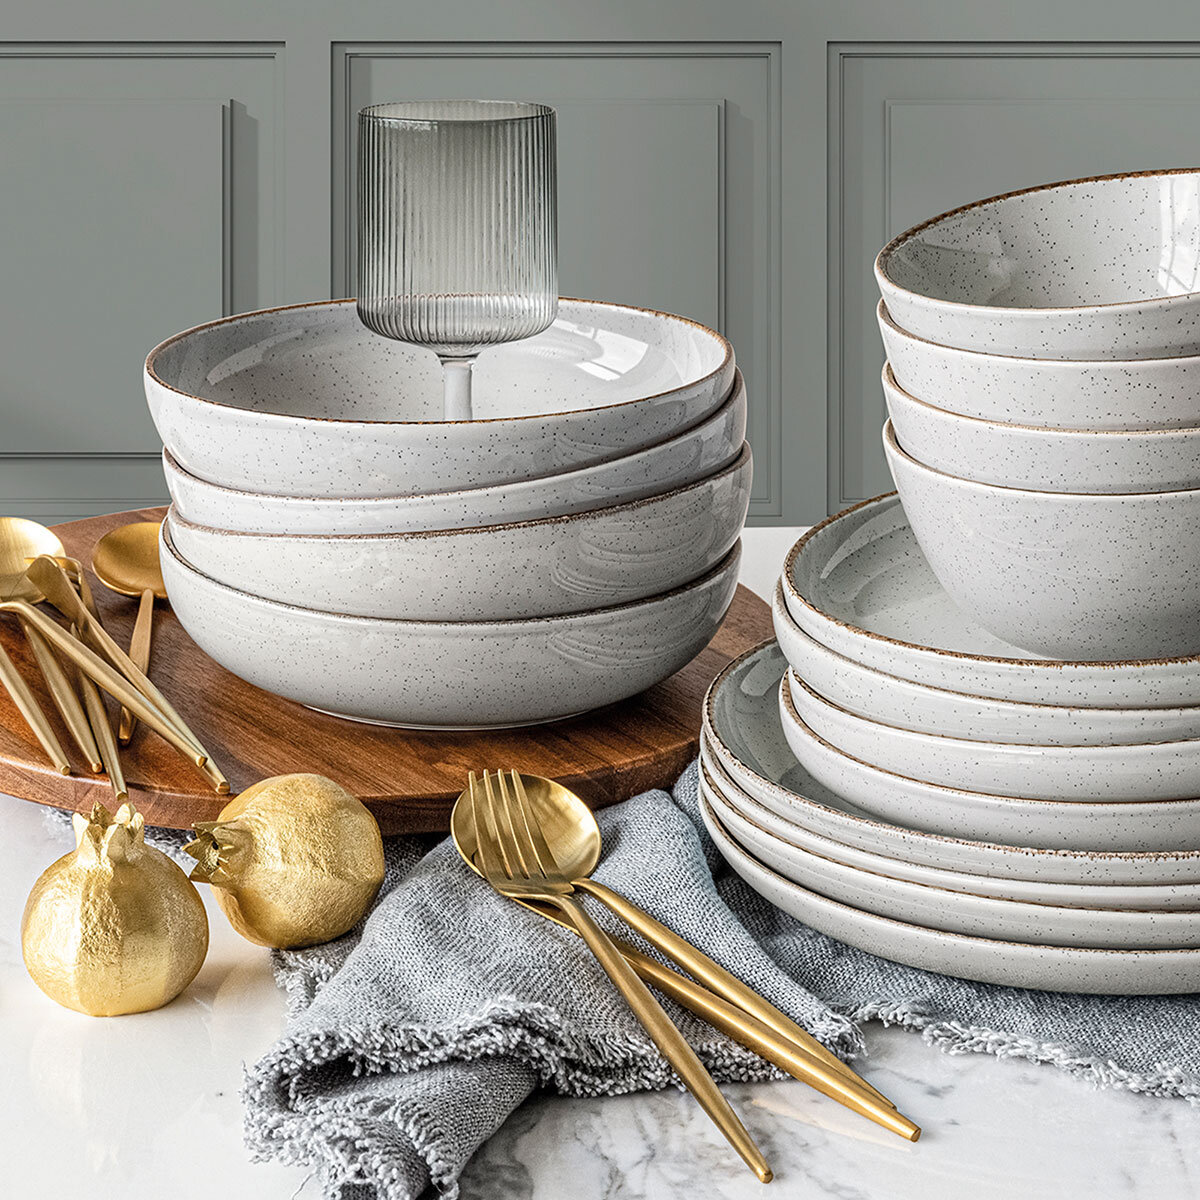 Costco Buys - I love this new 16-piece dinnerware set